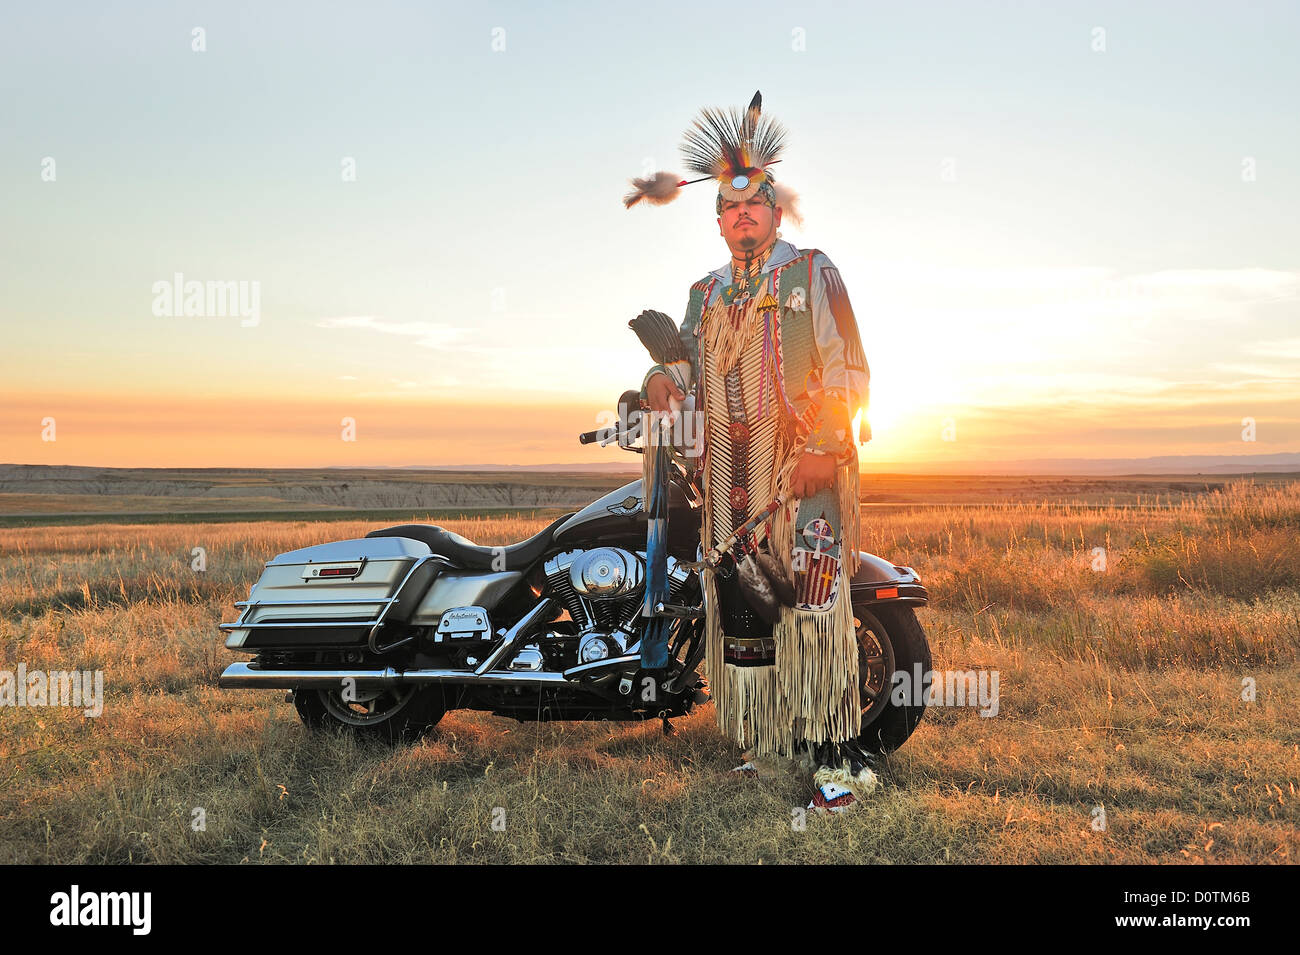 Sioux, Badlands, Stephen Yellowhawk, bike, badland, warriors, feathers, regalia, American Native, Lakota, South Dakota, USA, Uni Stock Photo